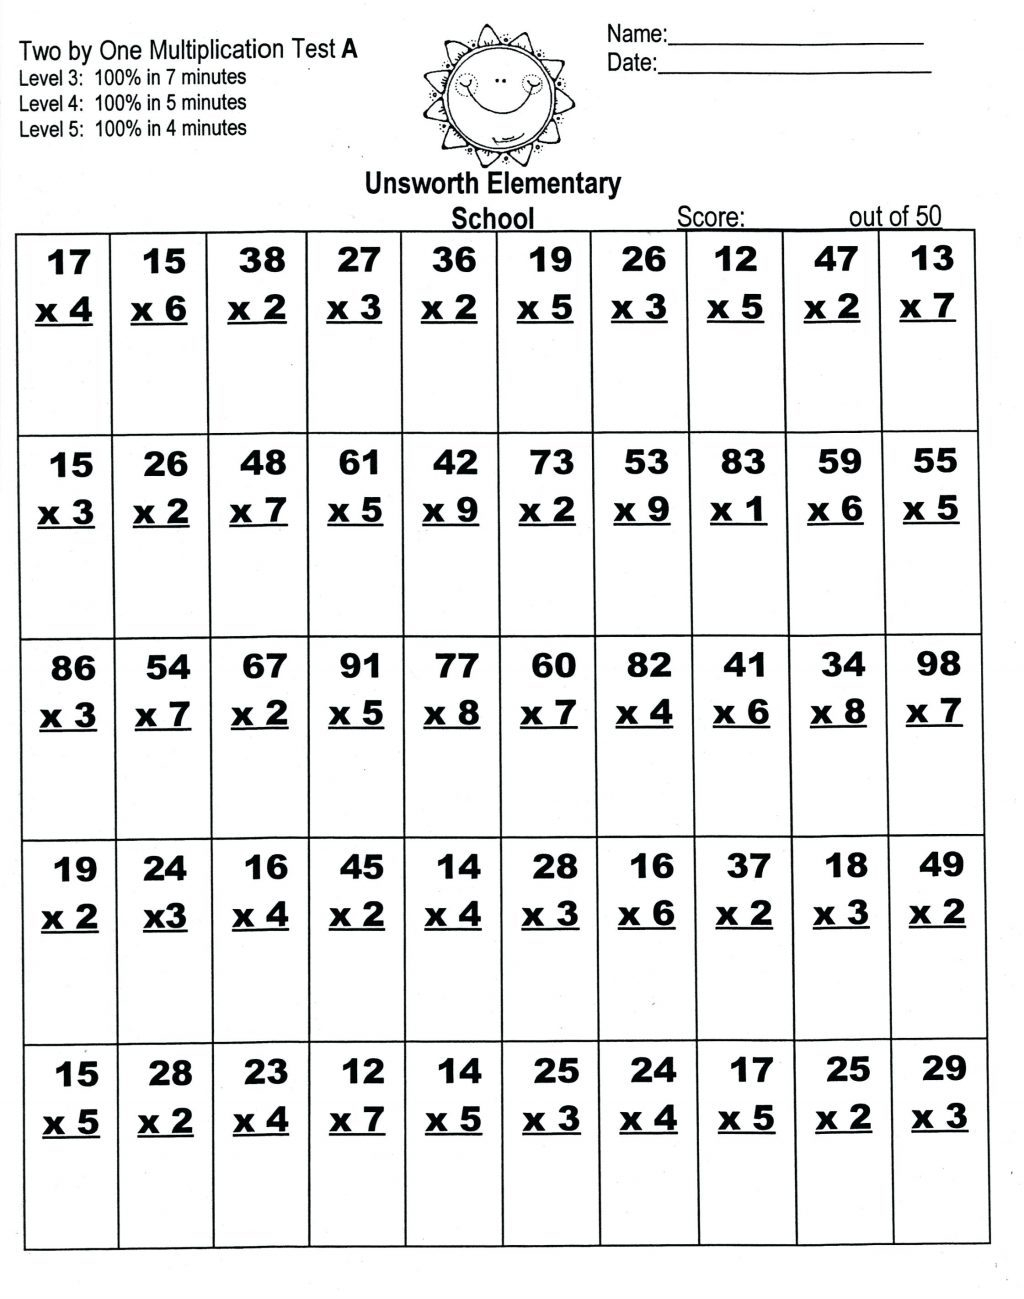 multiplication-worksheets-9th-grade-printablemultiplication